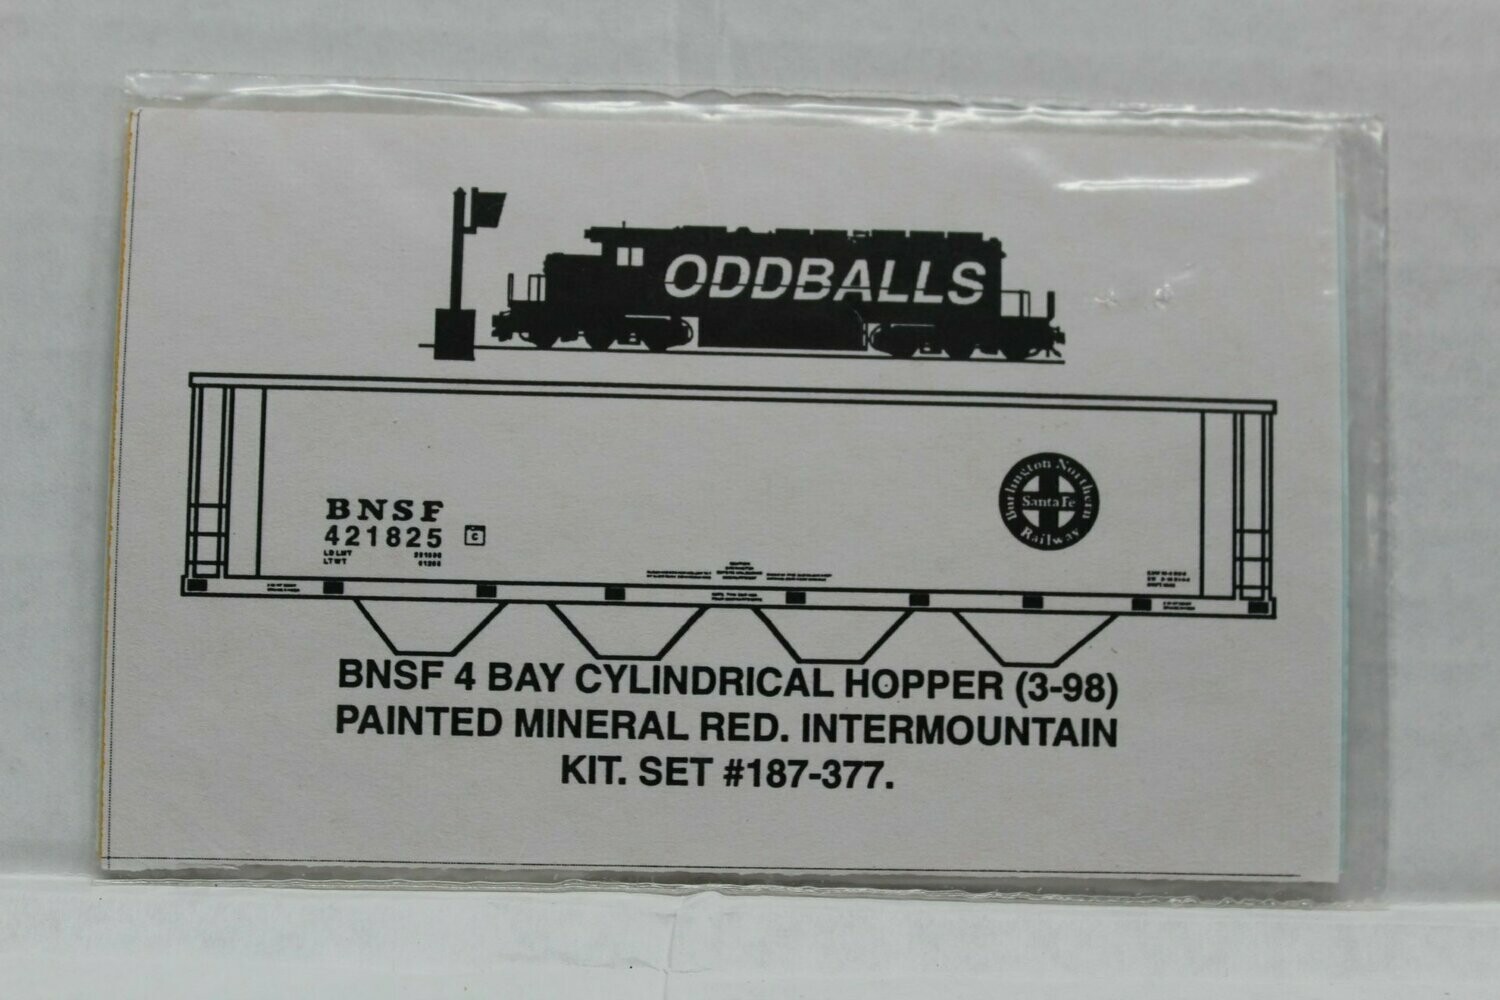 BNSF 4 Bay Cylindrical Hopper Decal set ODDBALL